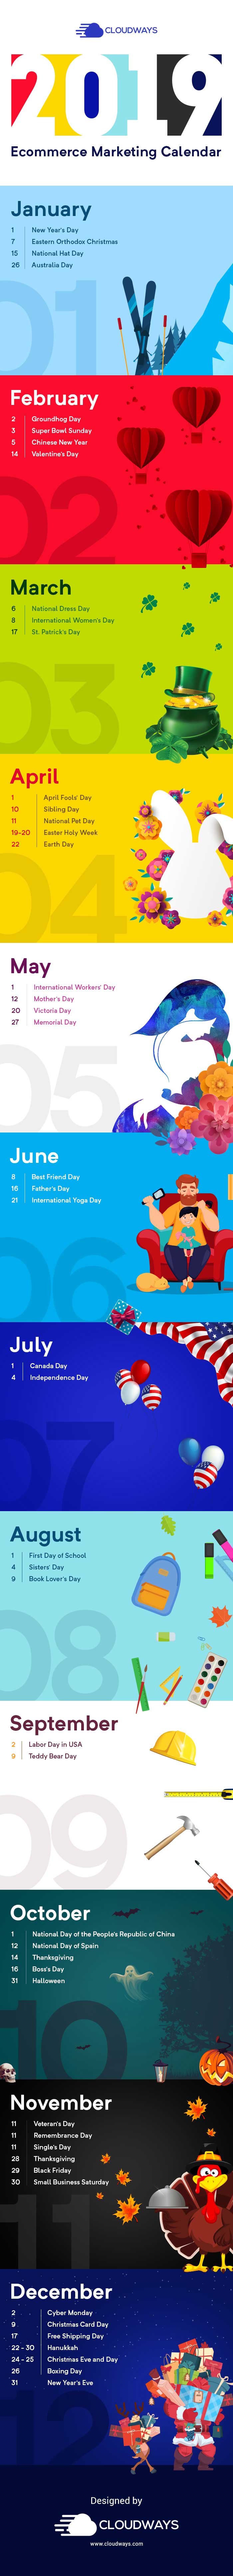 Ecommerce Holiday Marketing Calendar 2019 [Infographics]